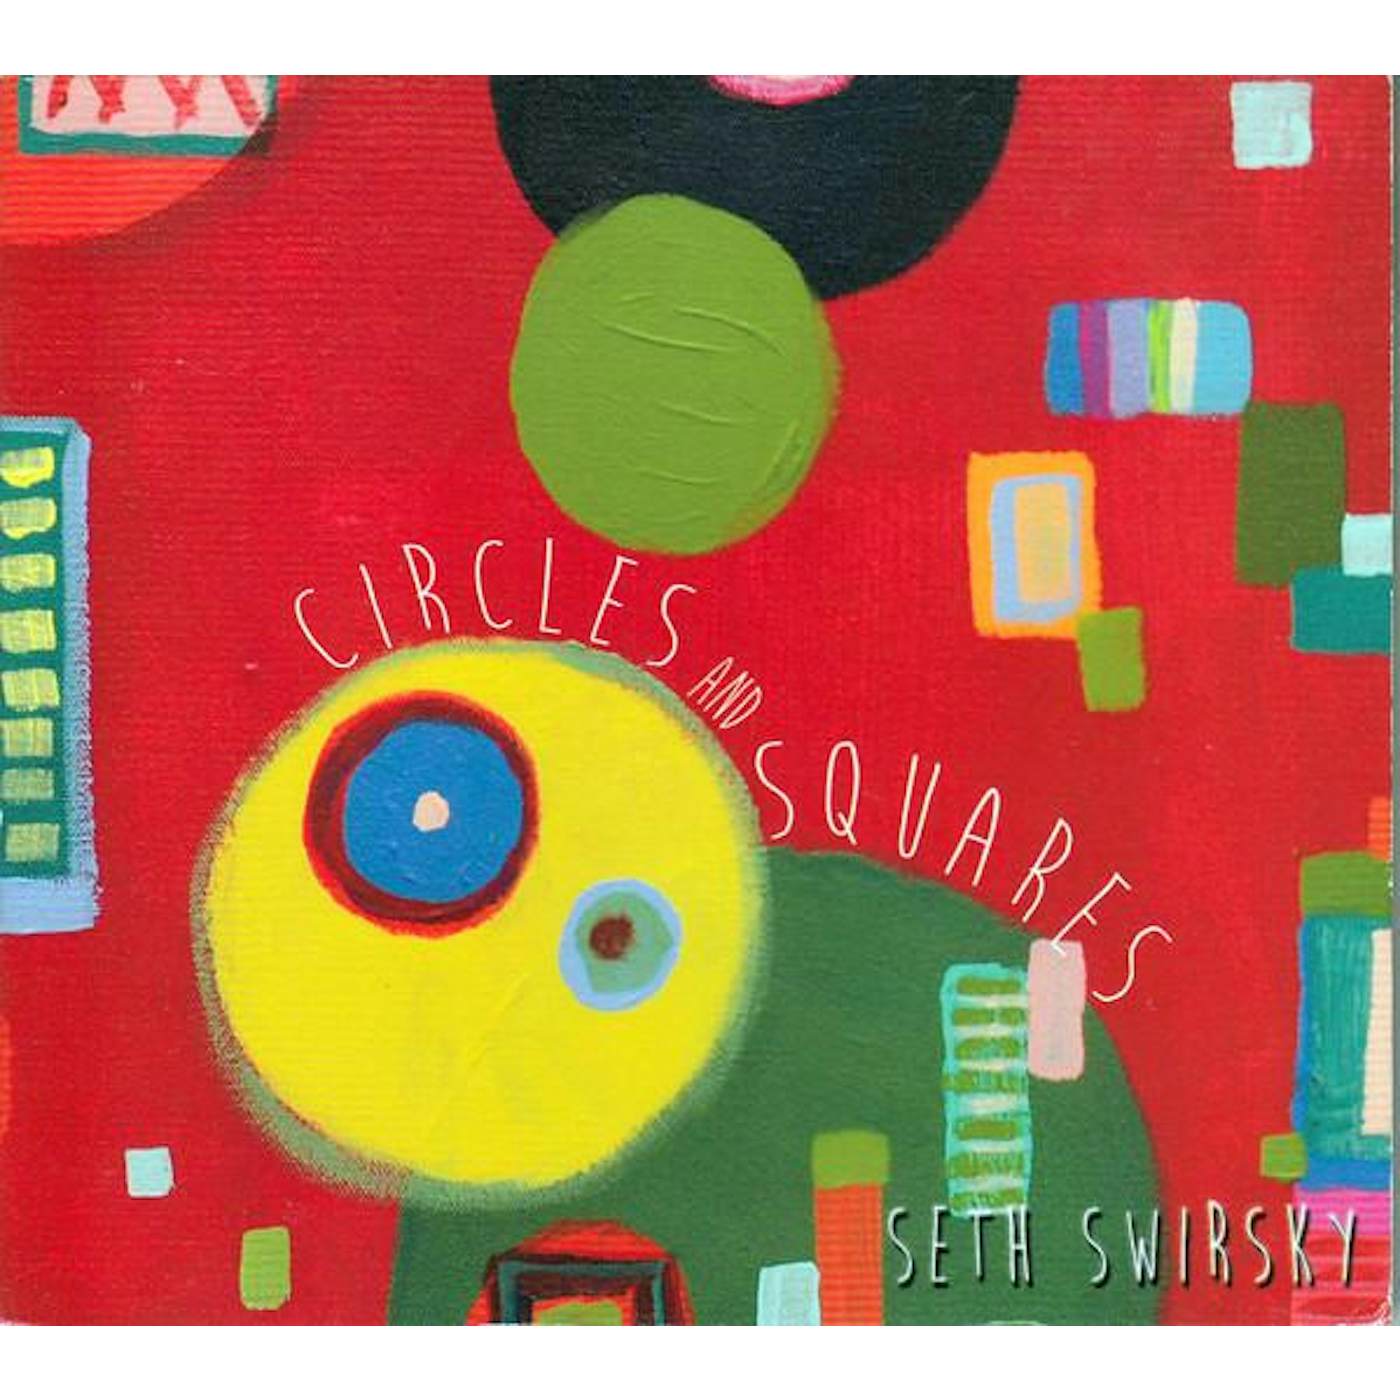 Seth Swirsky CIRCLES AND SQUARES CD